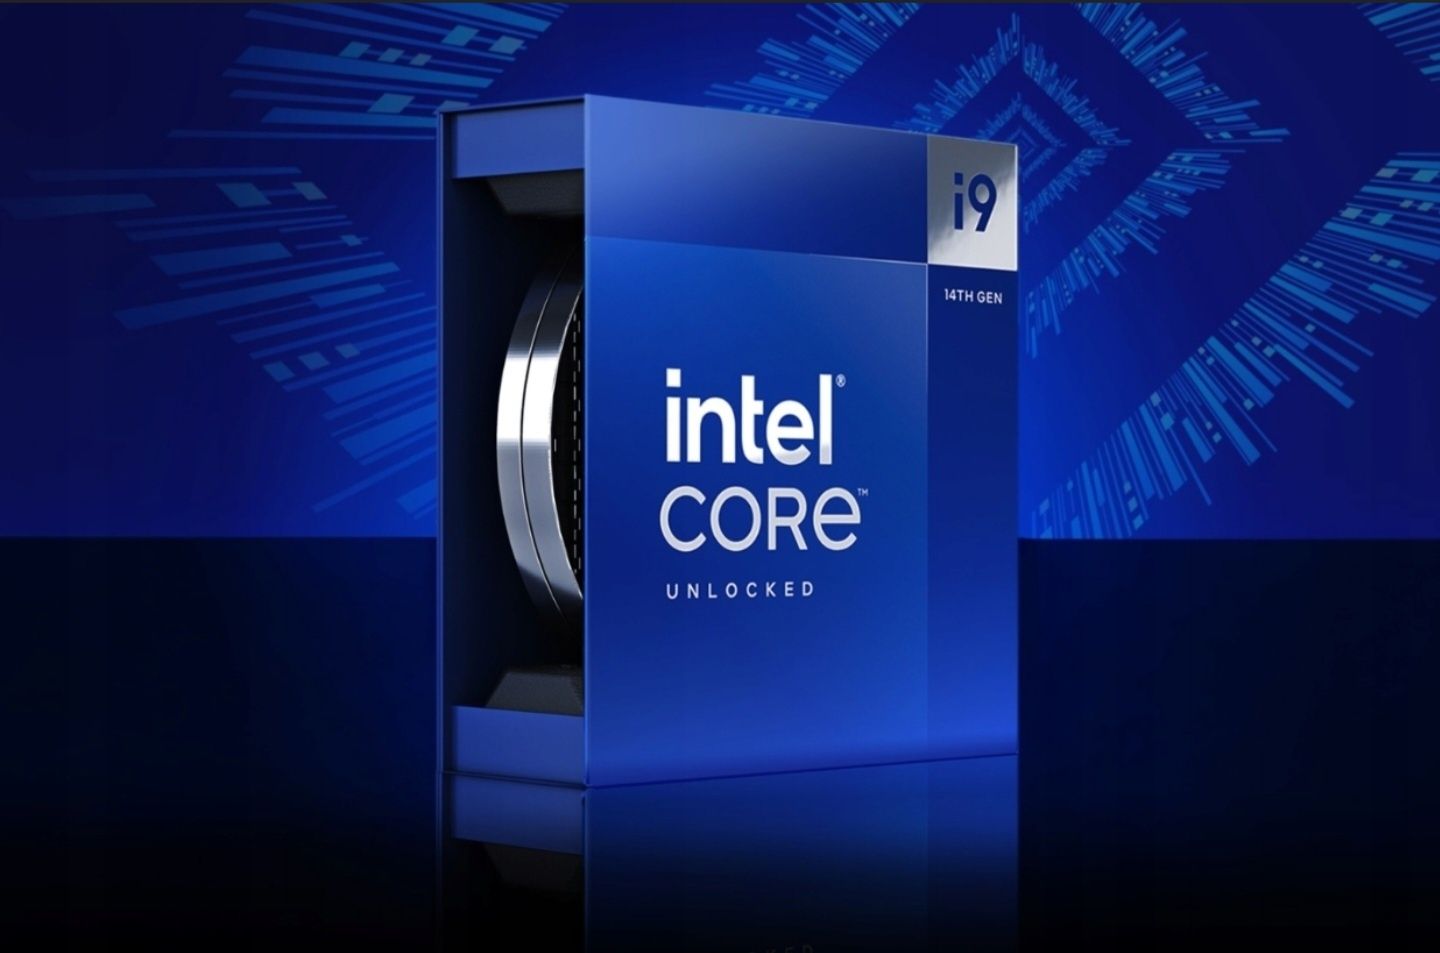 Procesor Intel Core I9 14gen